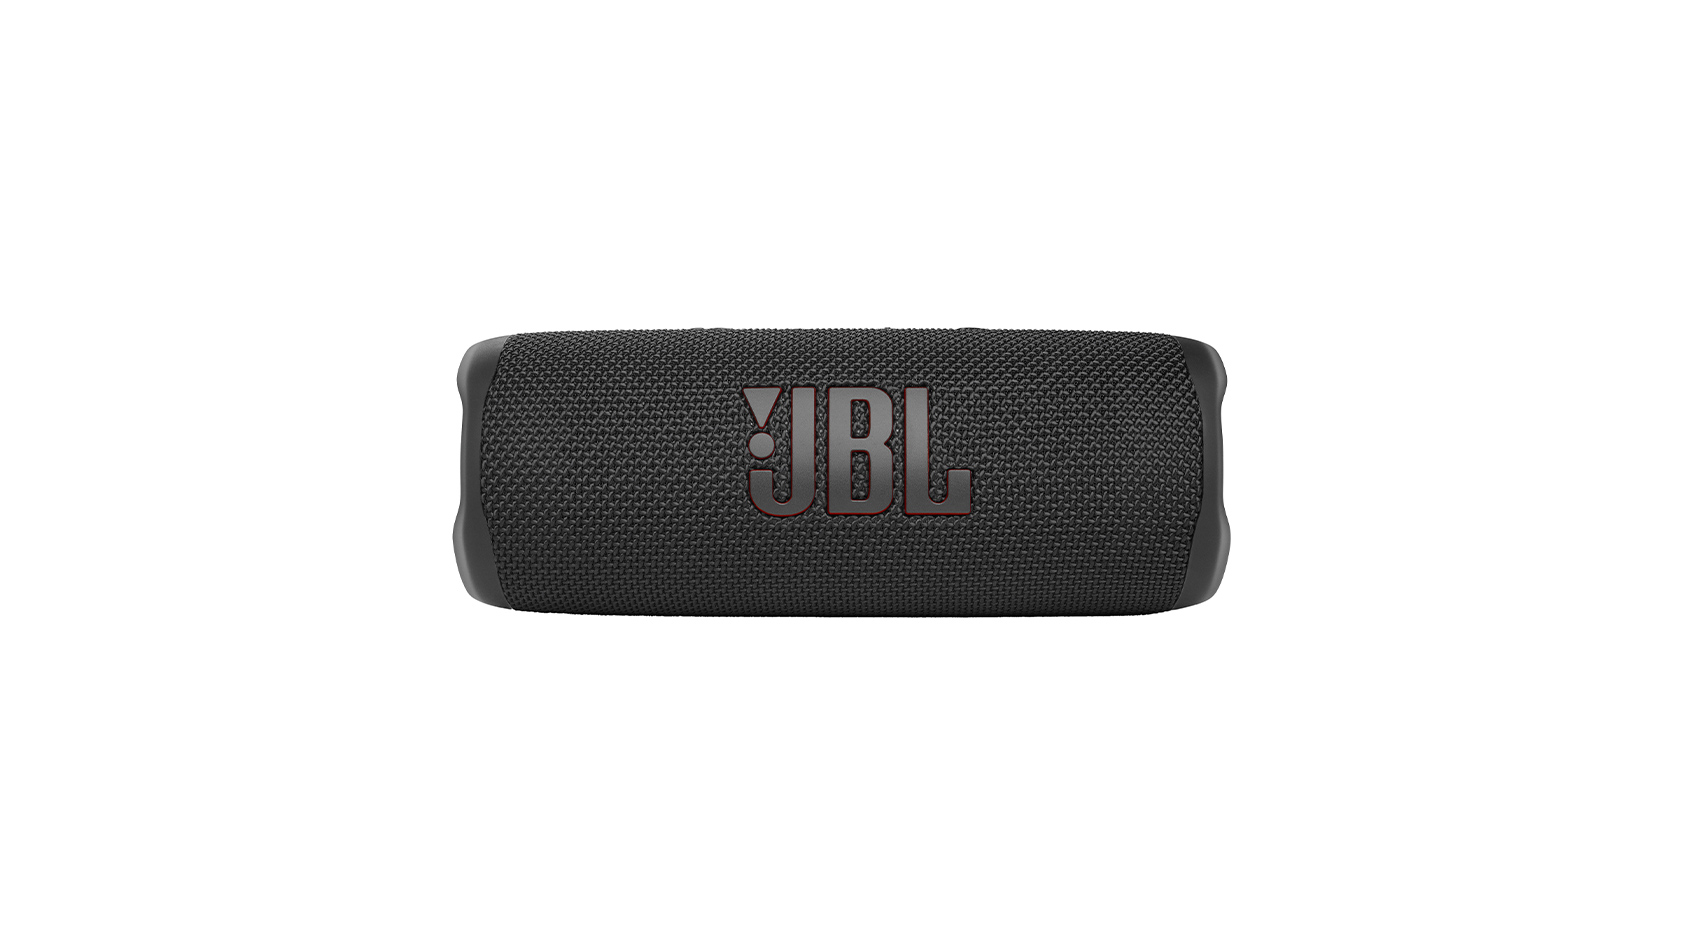 The JBL Flip 6 Bluetooth speaker in black against a white background.